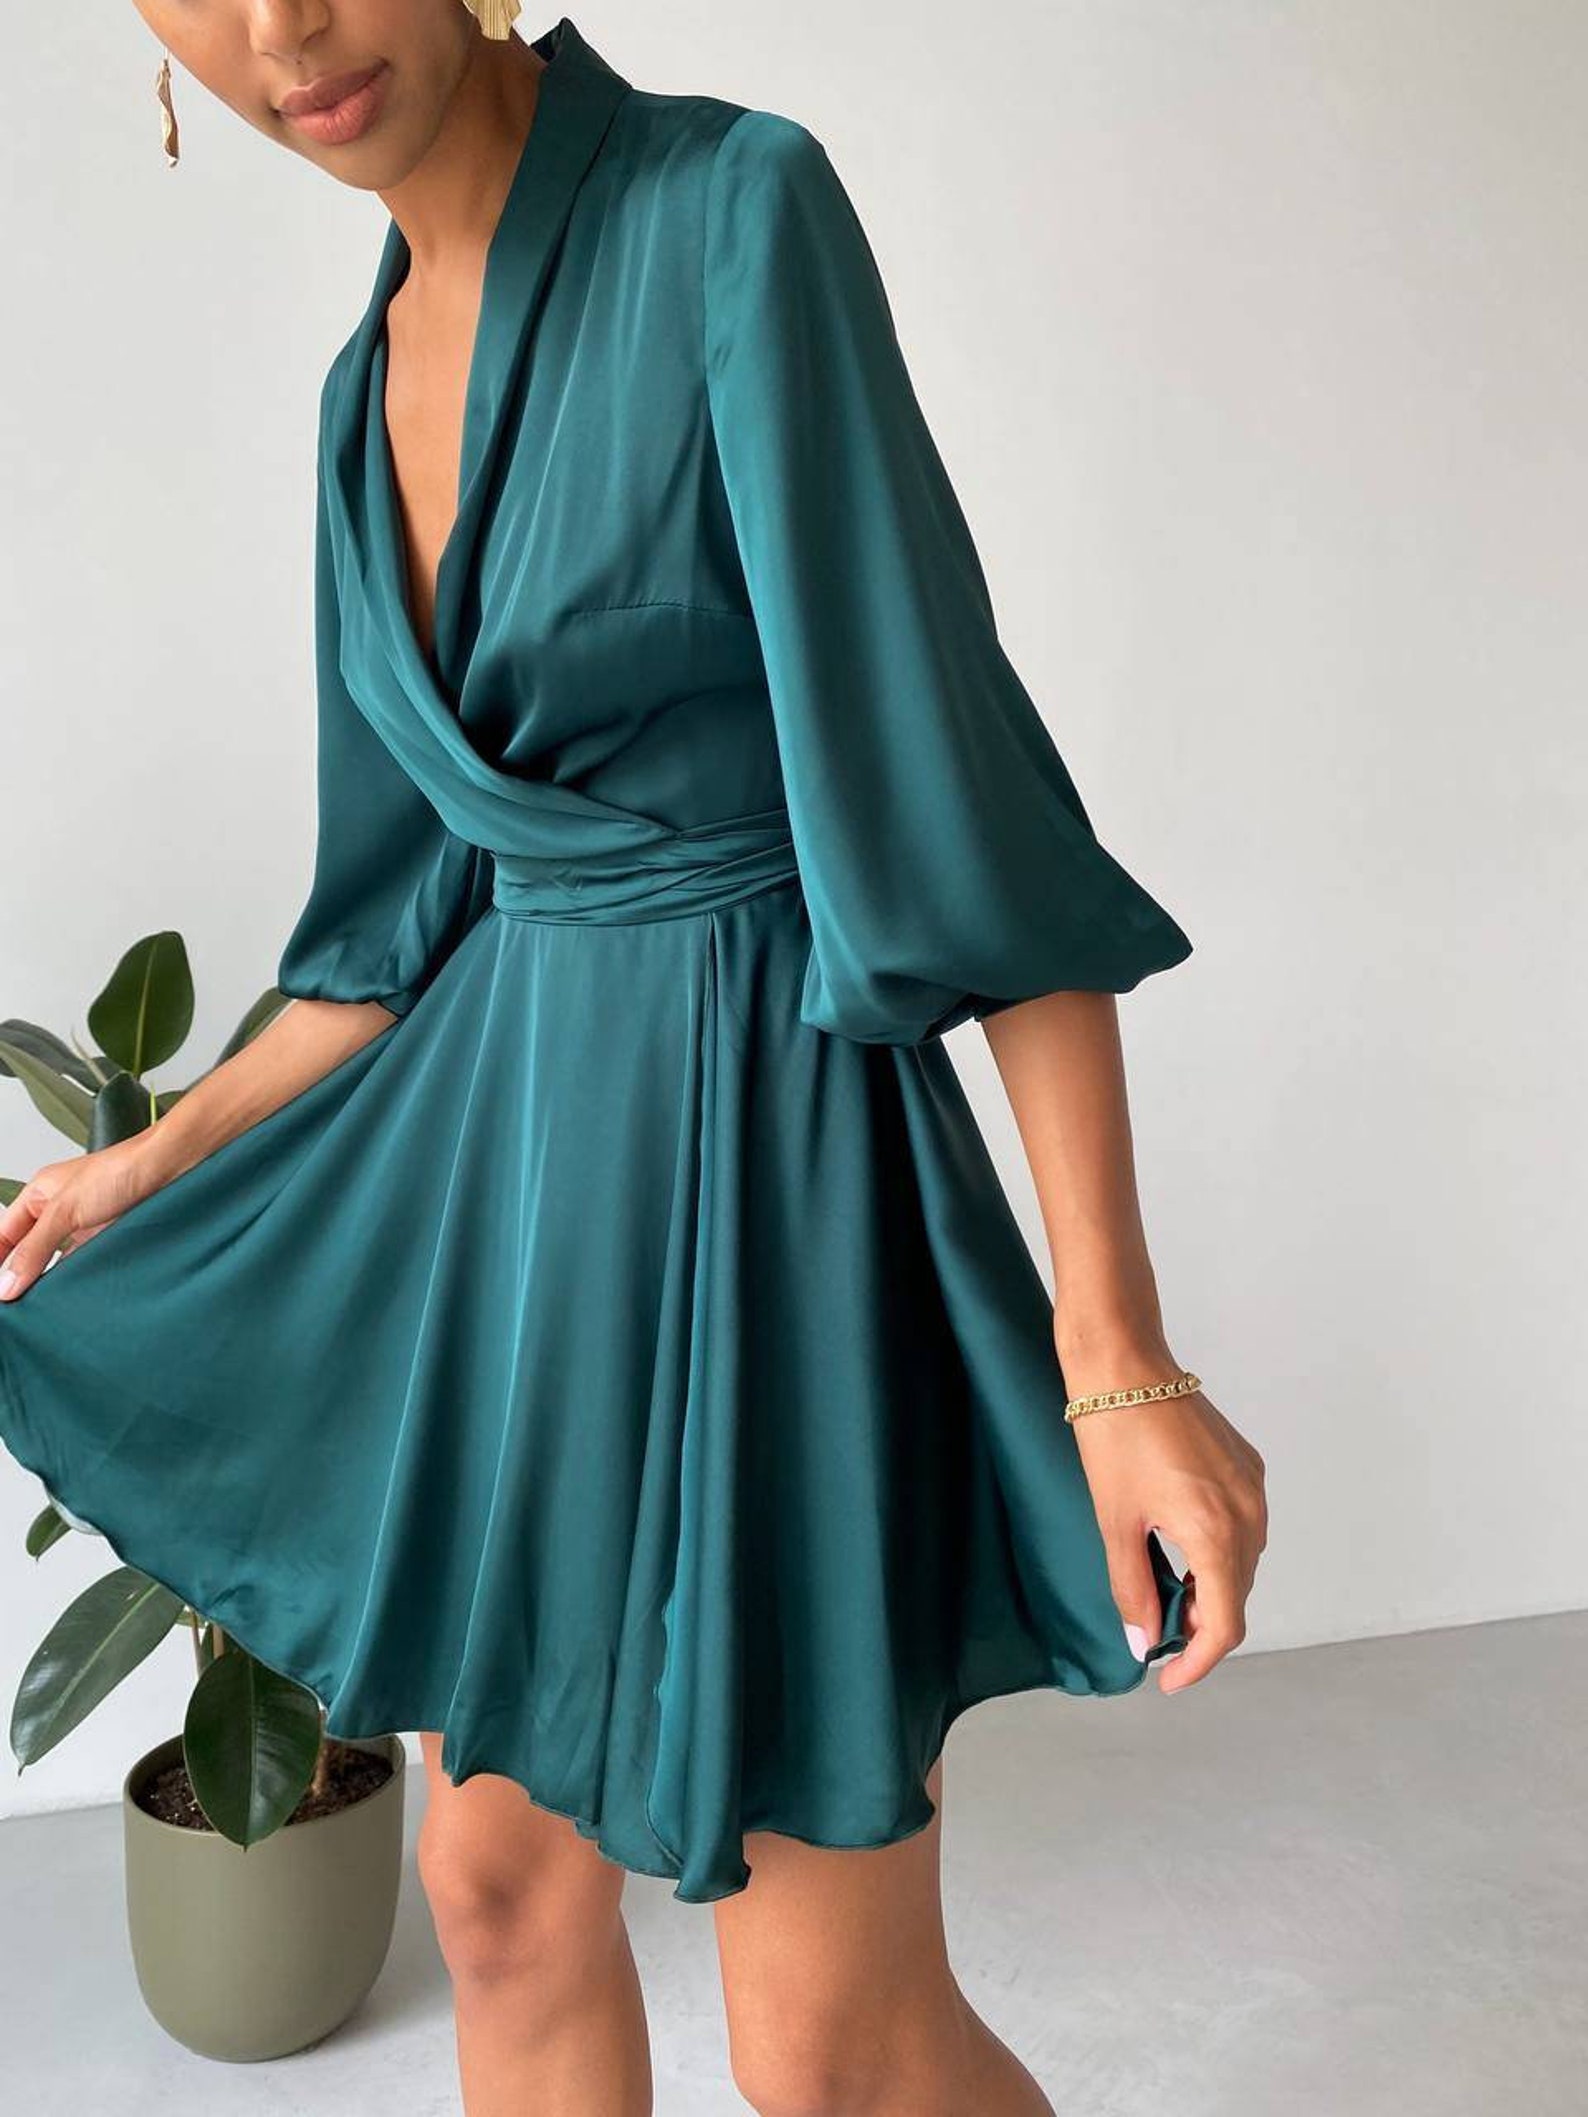 Green Emerald Silk Wrap Dress For Women Sexy Flowy Deep V Neck Etsy 